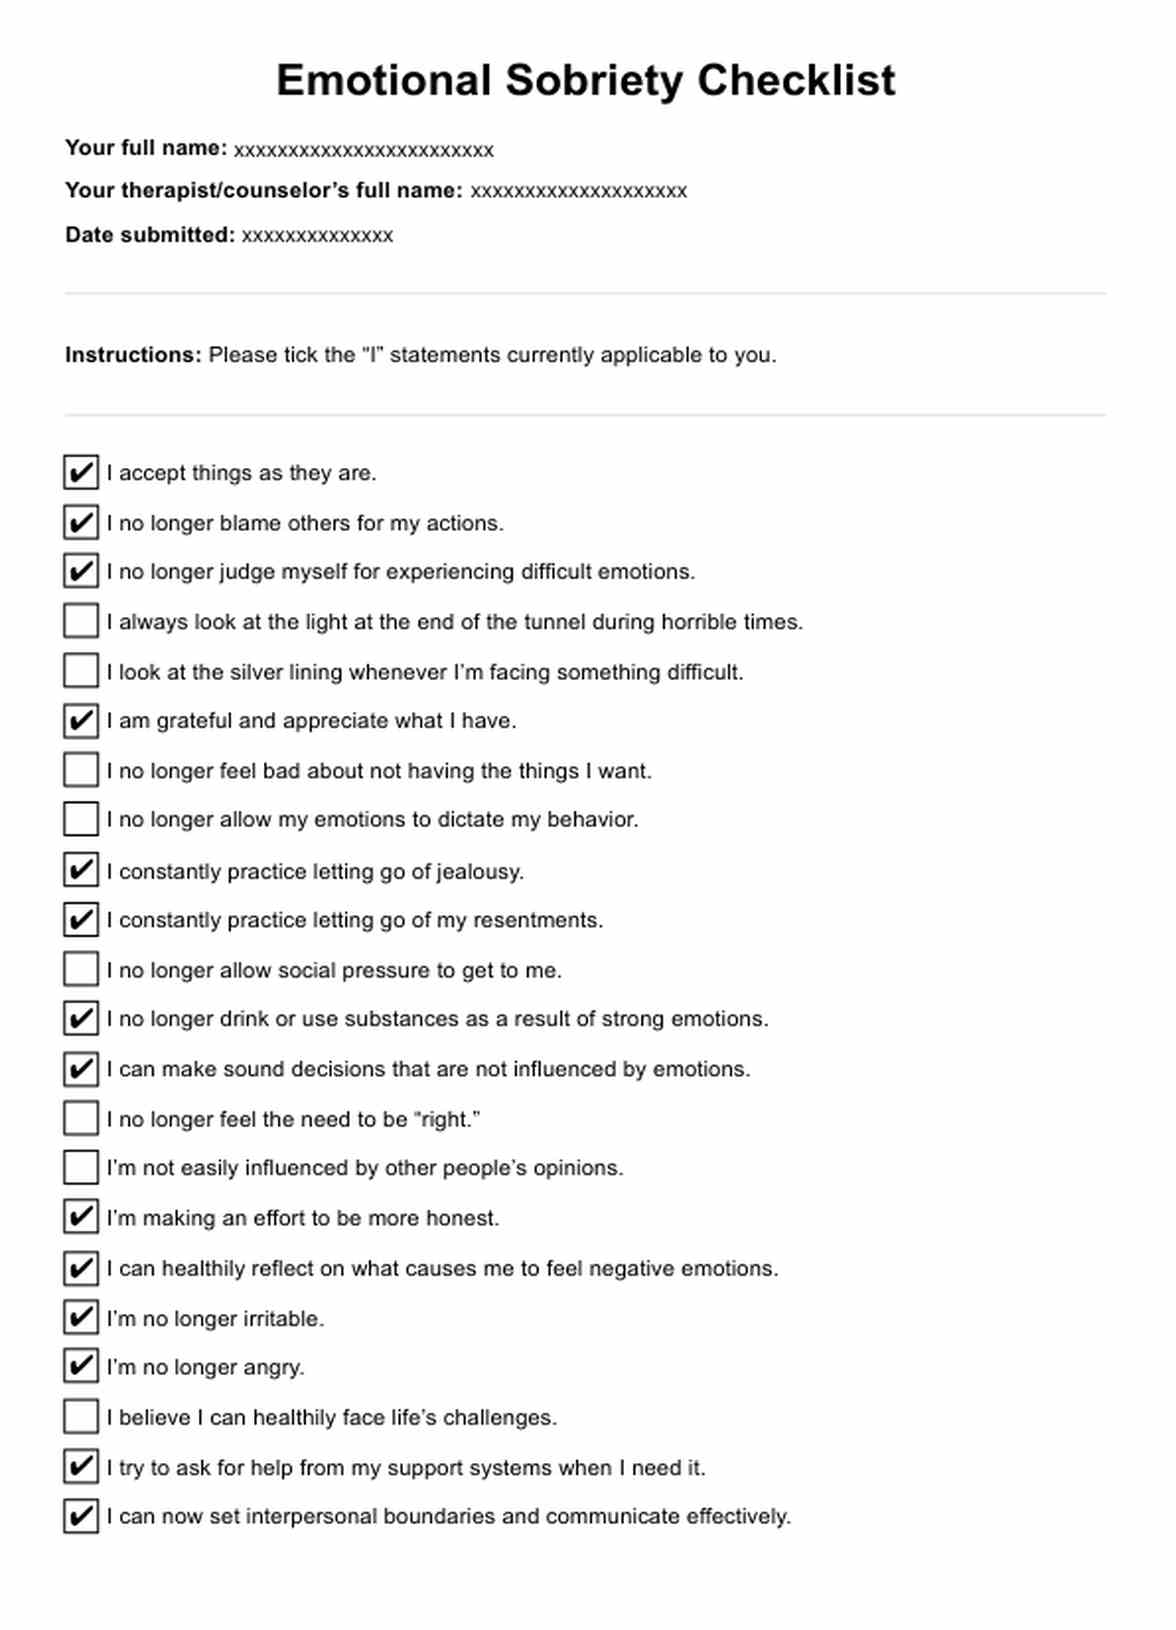 Emotional Sobriety Checklist PDF Example